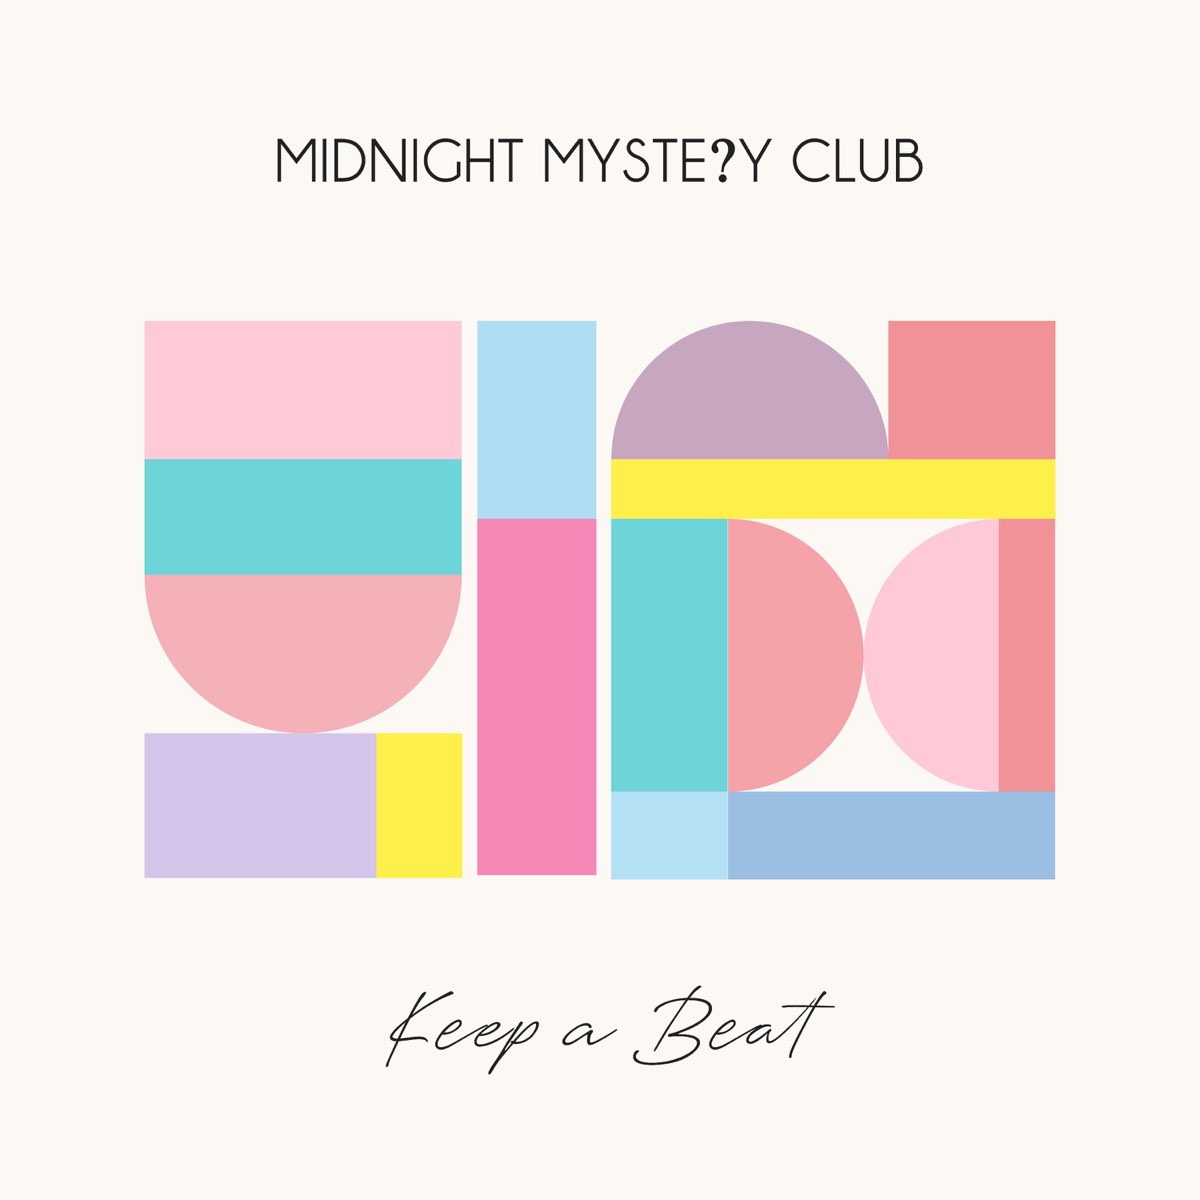 Keep a Beat - Single by Midnight Mystery Club on Apple Music